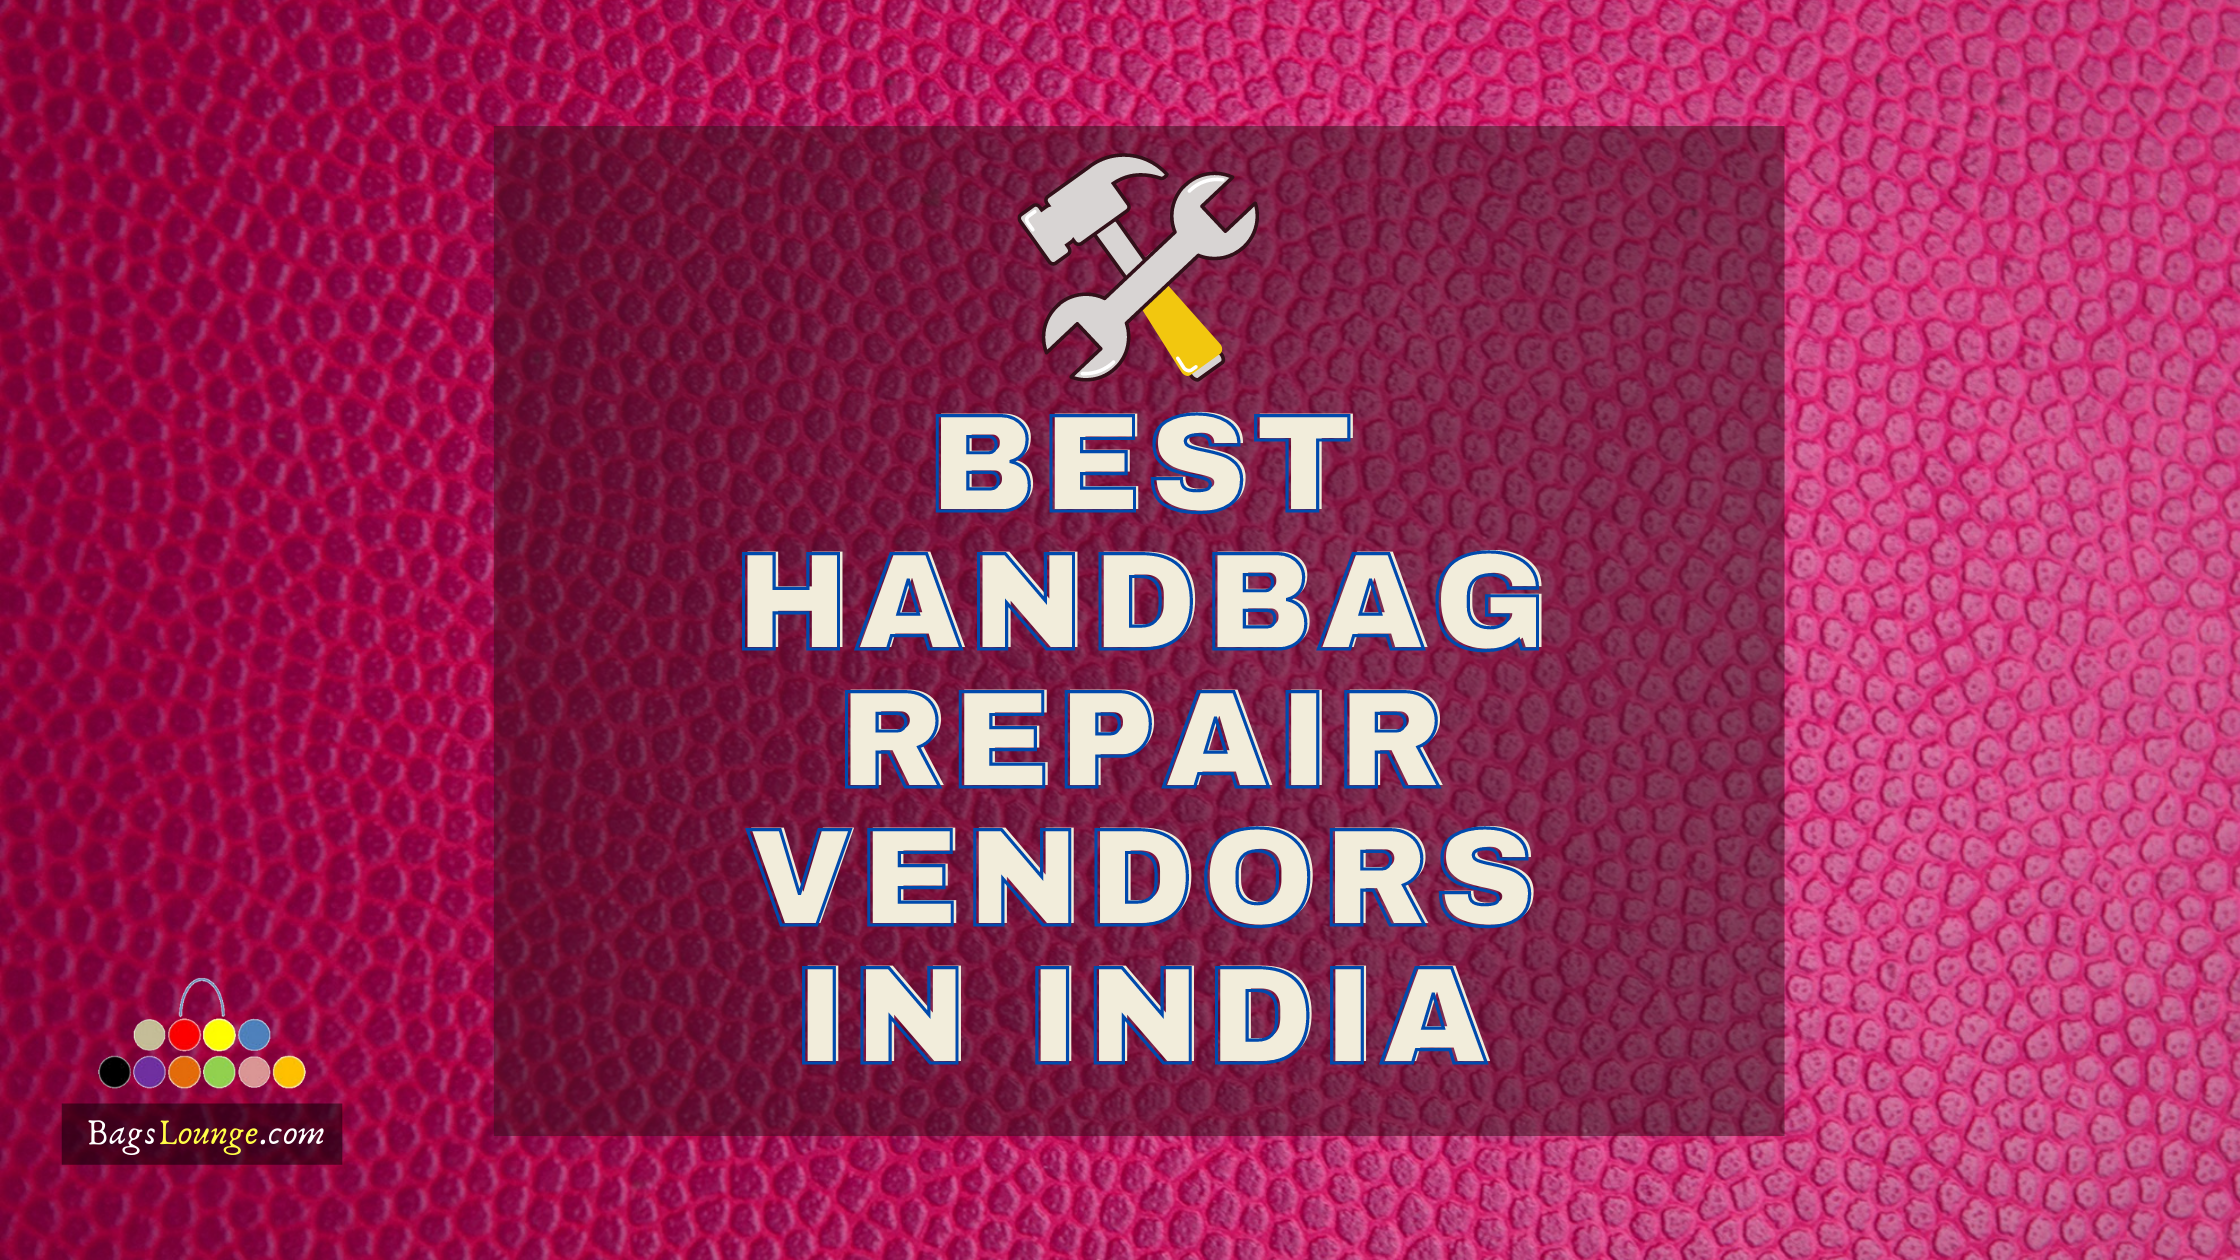 Handbag Cleaning & Repair Services, India